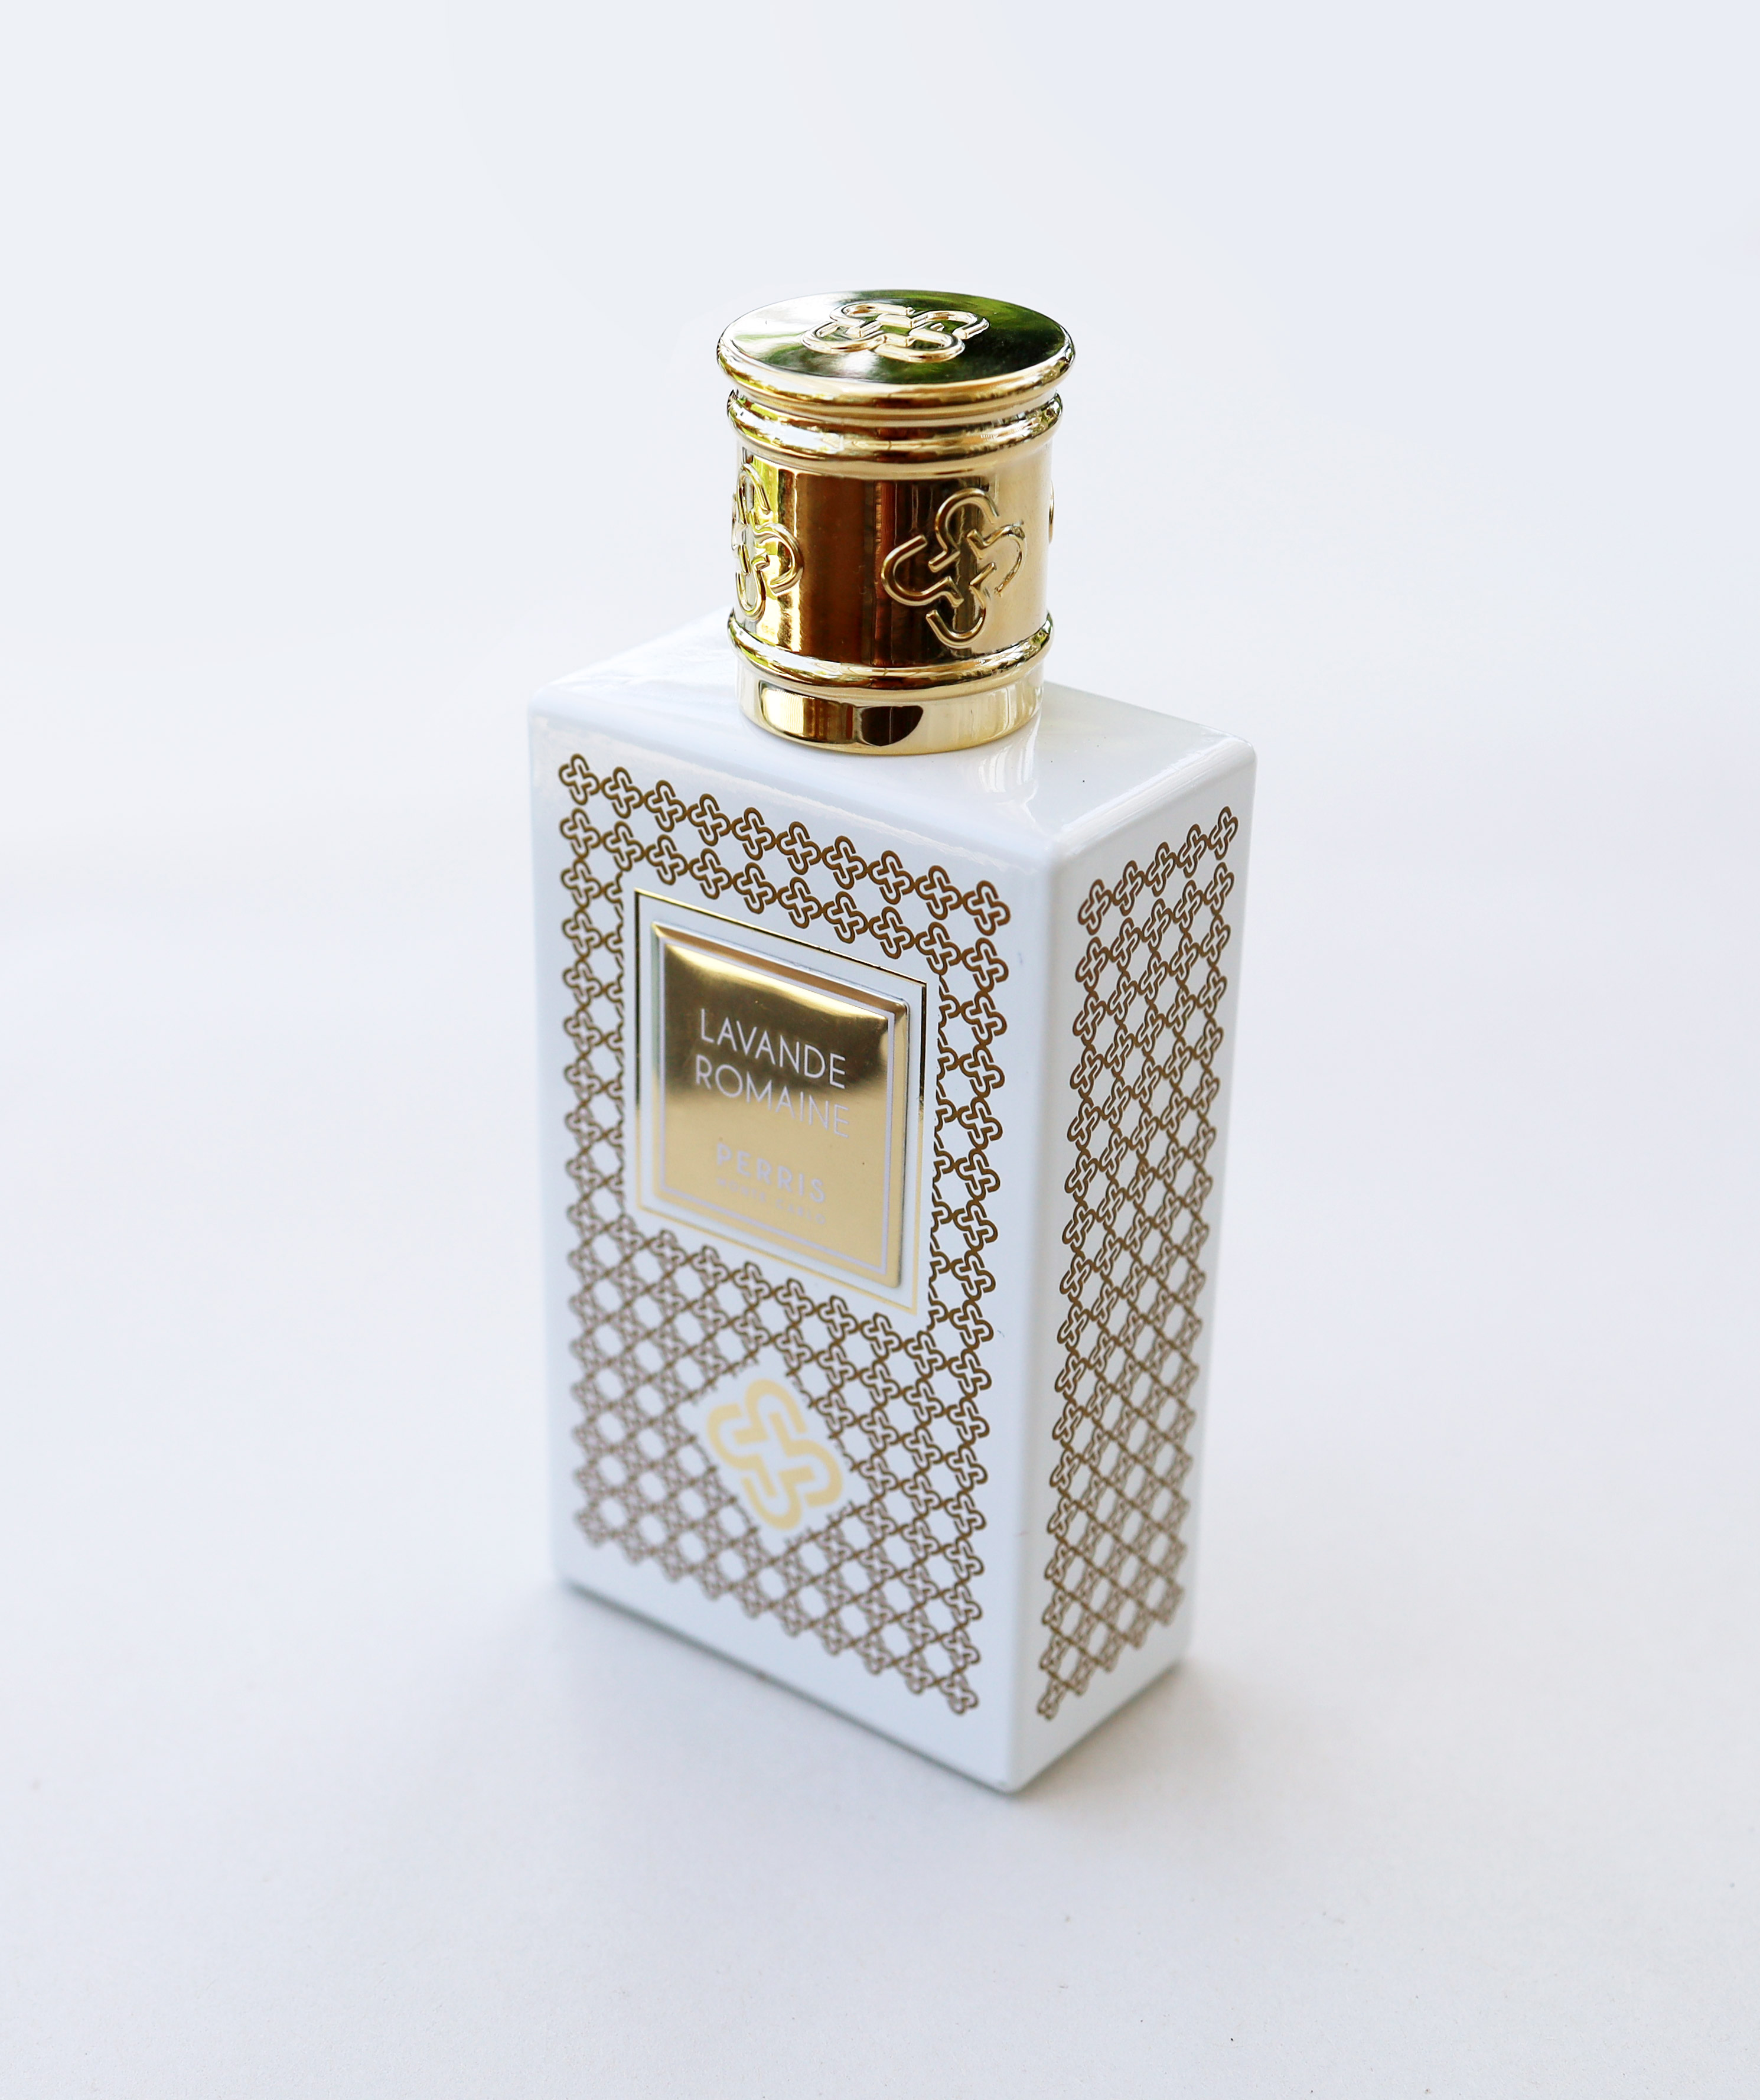 Mimosa Tanneron & Lavande Romaine Perris Monte Carlo Perfume Review ...